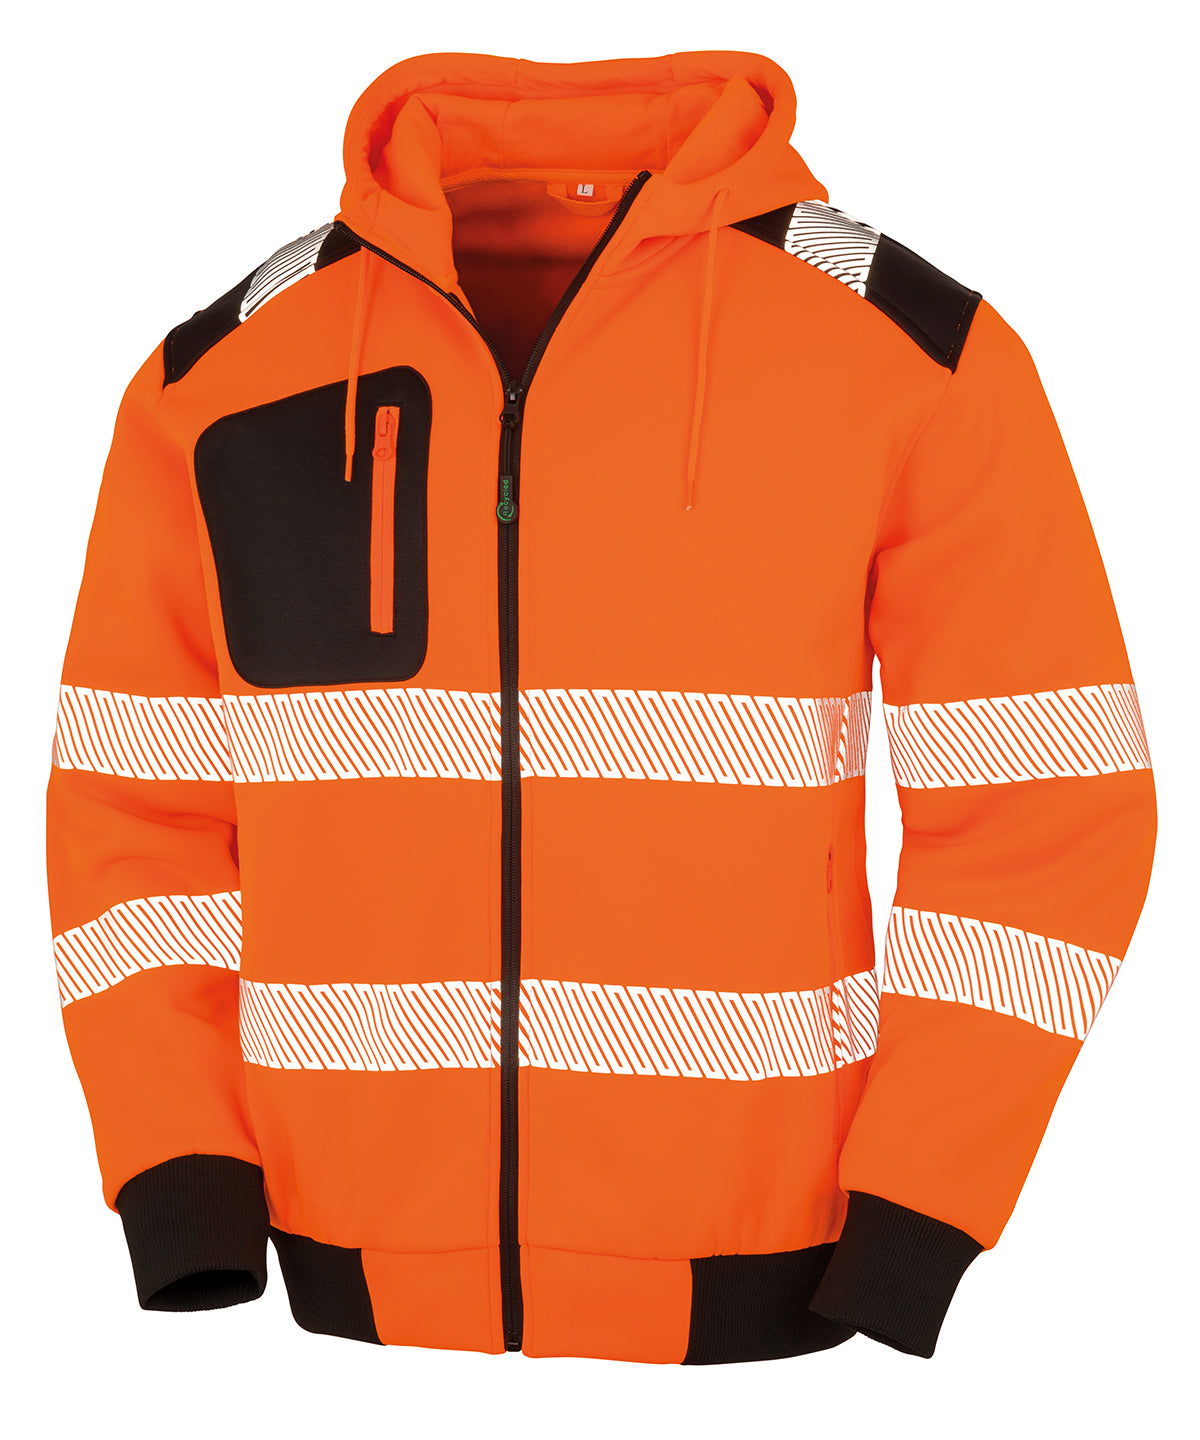 Personalised Hoodies - Neon Orange Result Genuine Recycled Recycled robust zipped safety hoodie